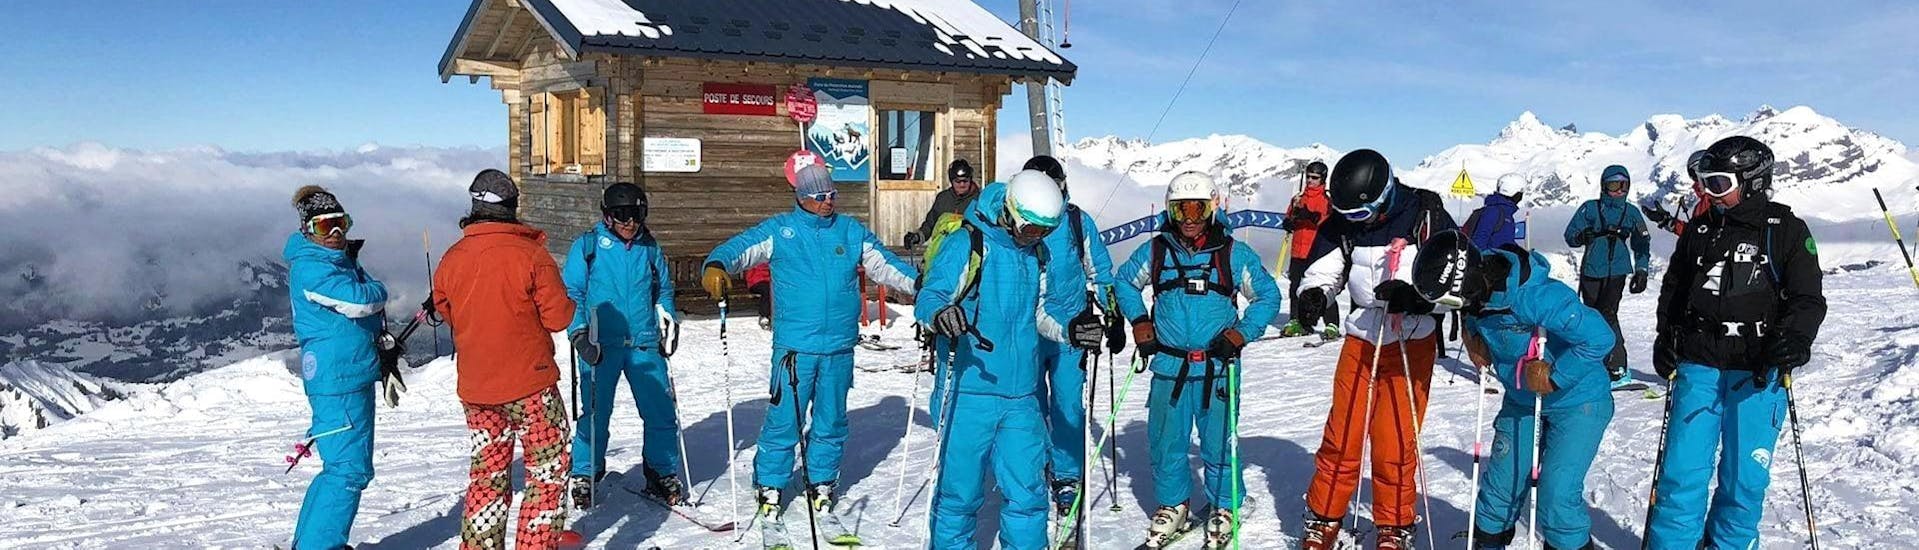 adult-ski-lessons-flaine-esi-grand-massif-hero